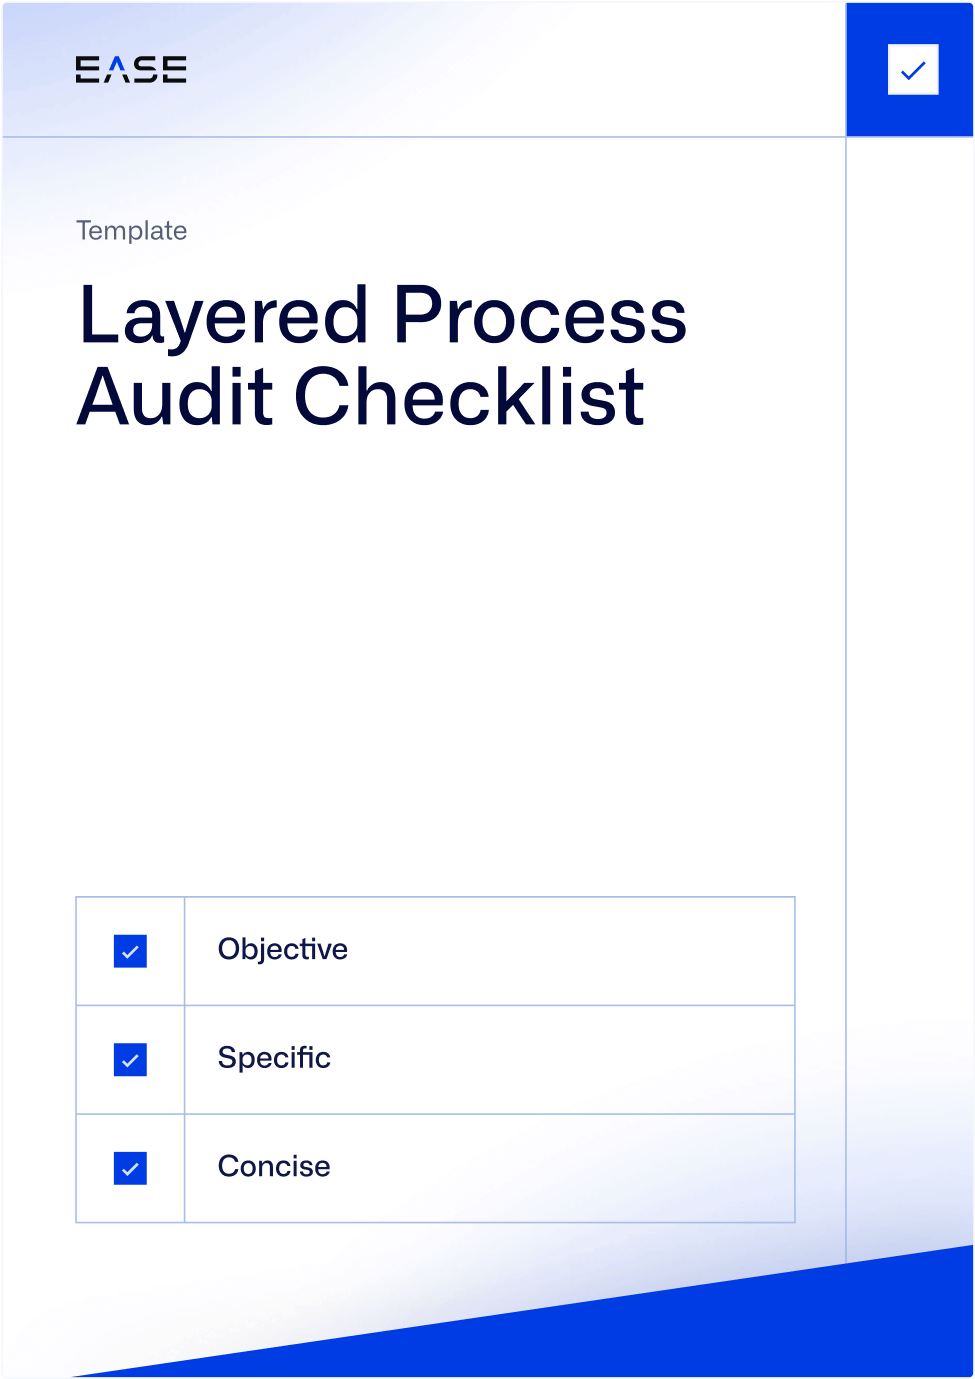 Layered Process Audit Checklist